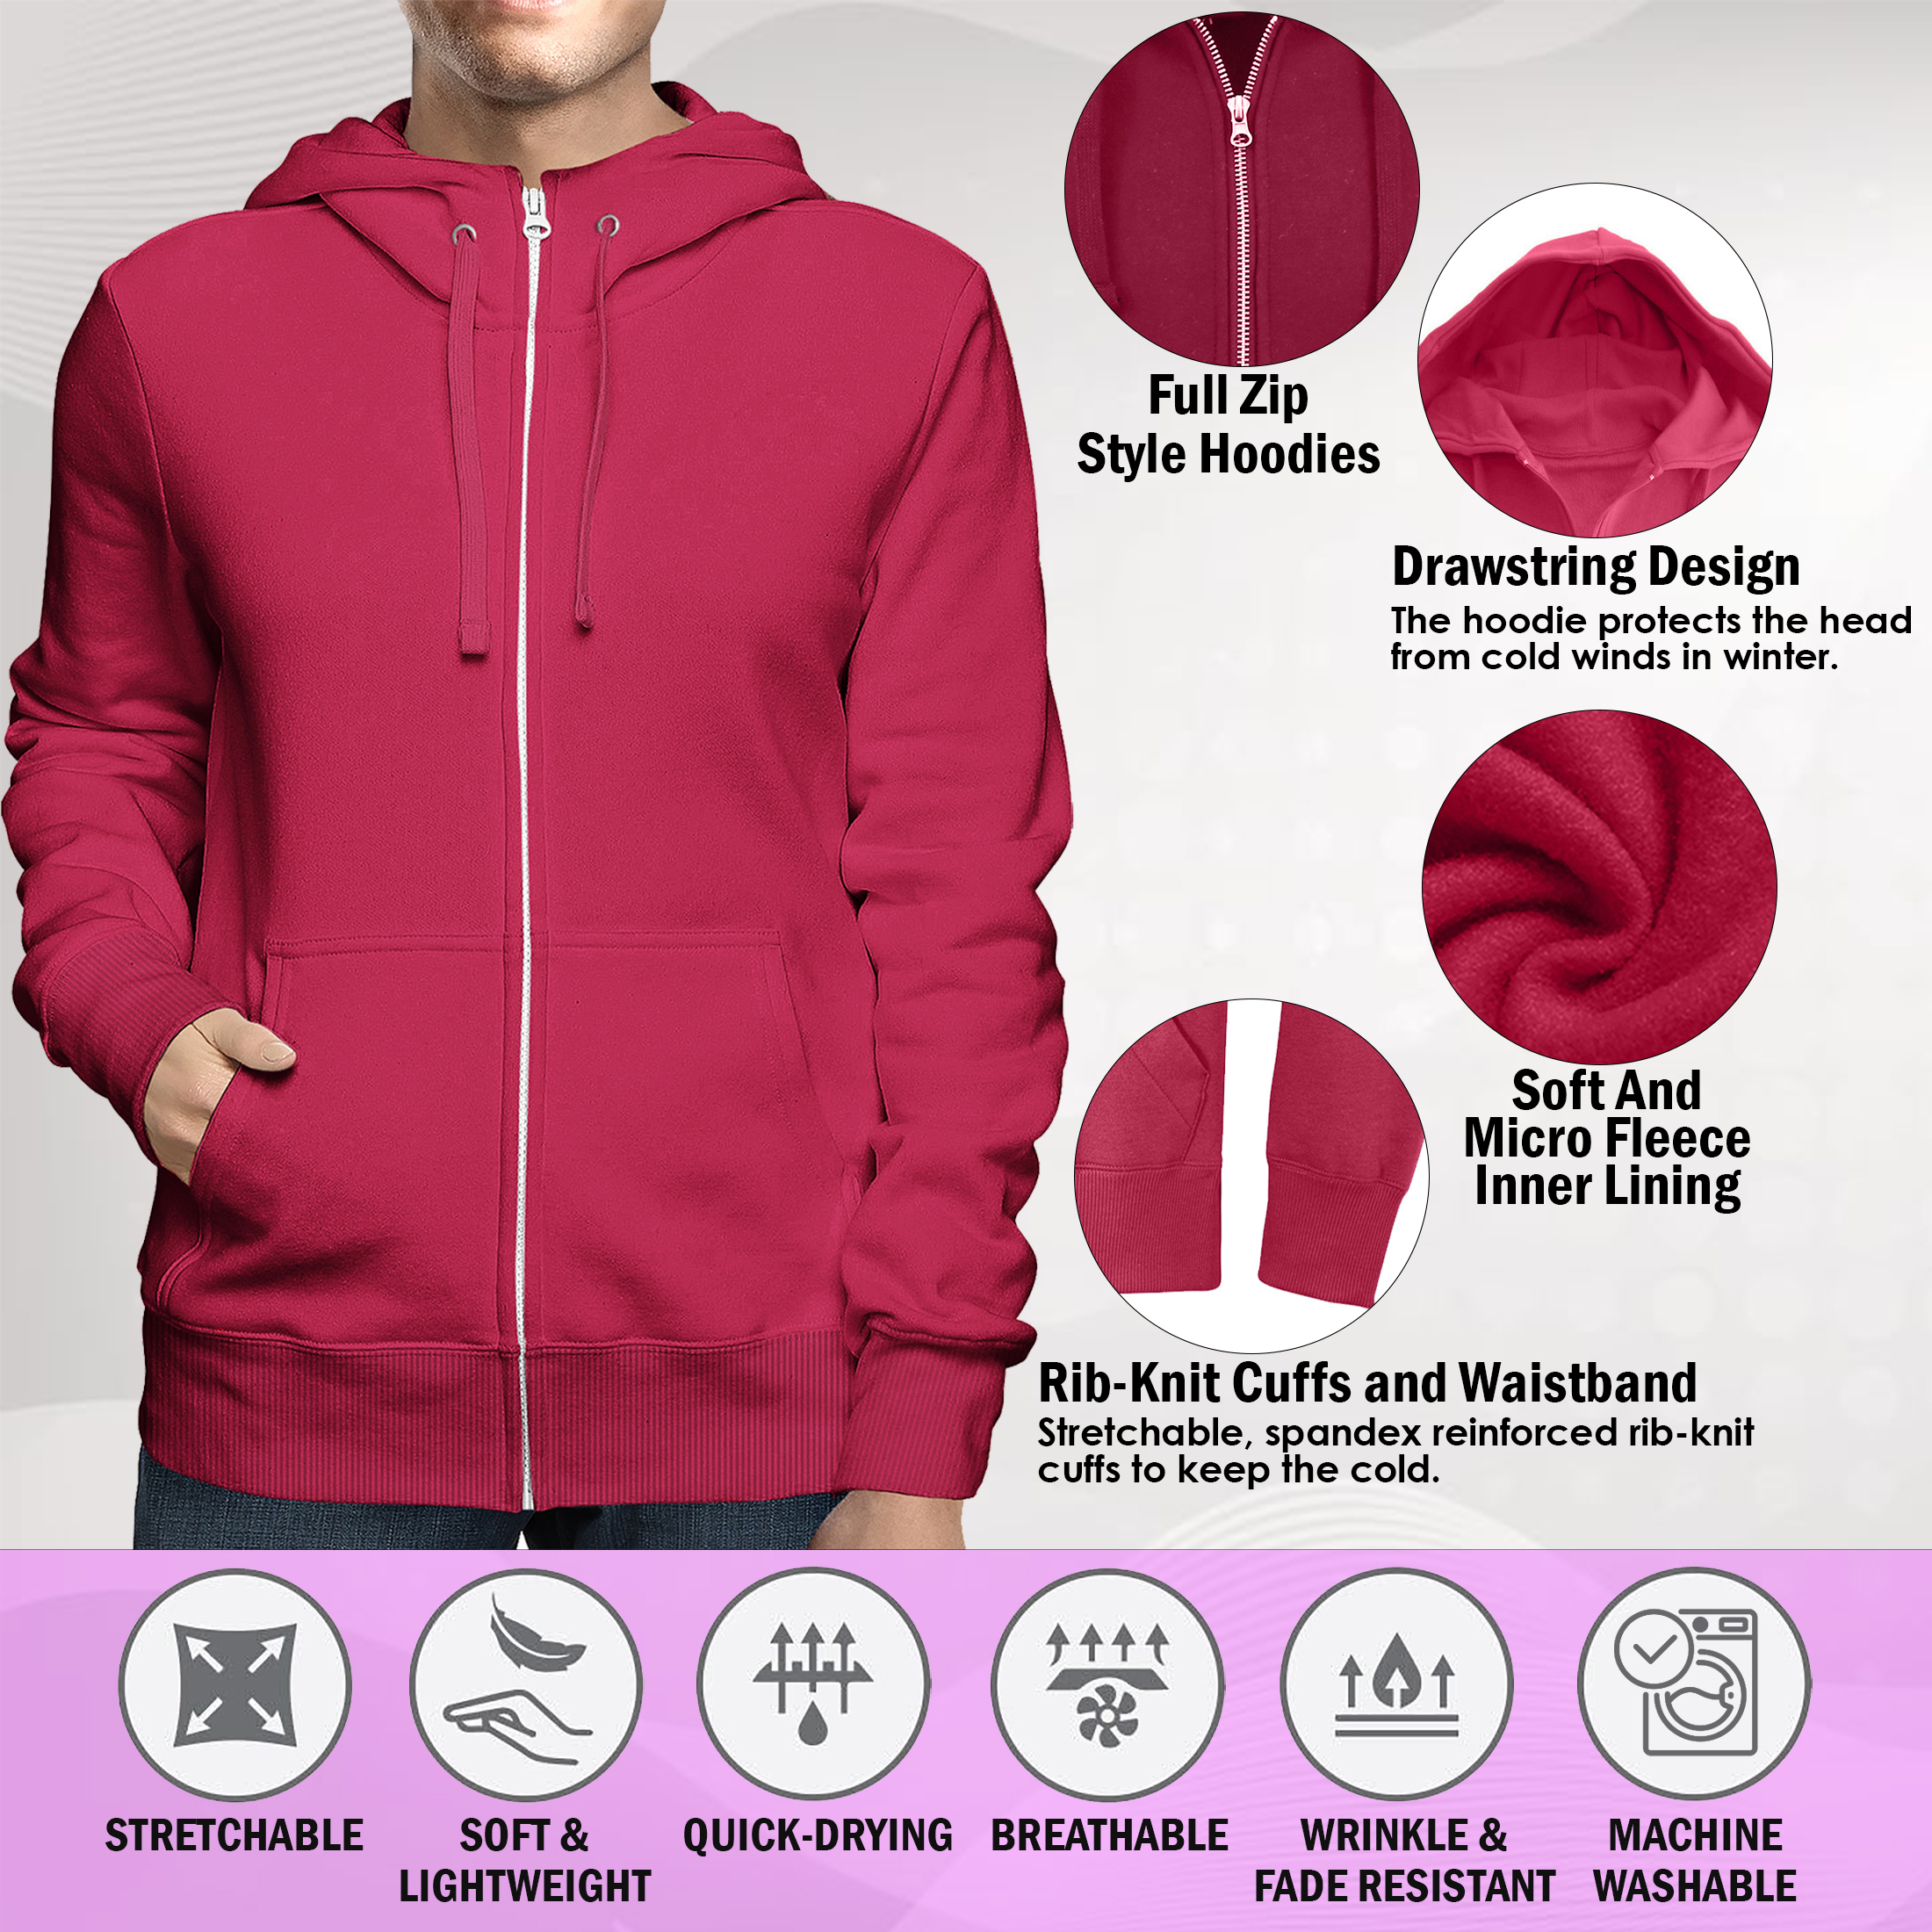 2-Pack: Men's Full Zip Up Fleece-Lined Hoodie Sweatshirt (Big & Tall Size Available) - Navy & Gray, Medium